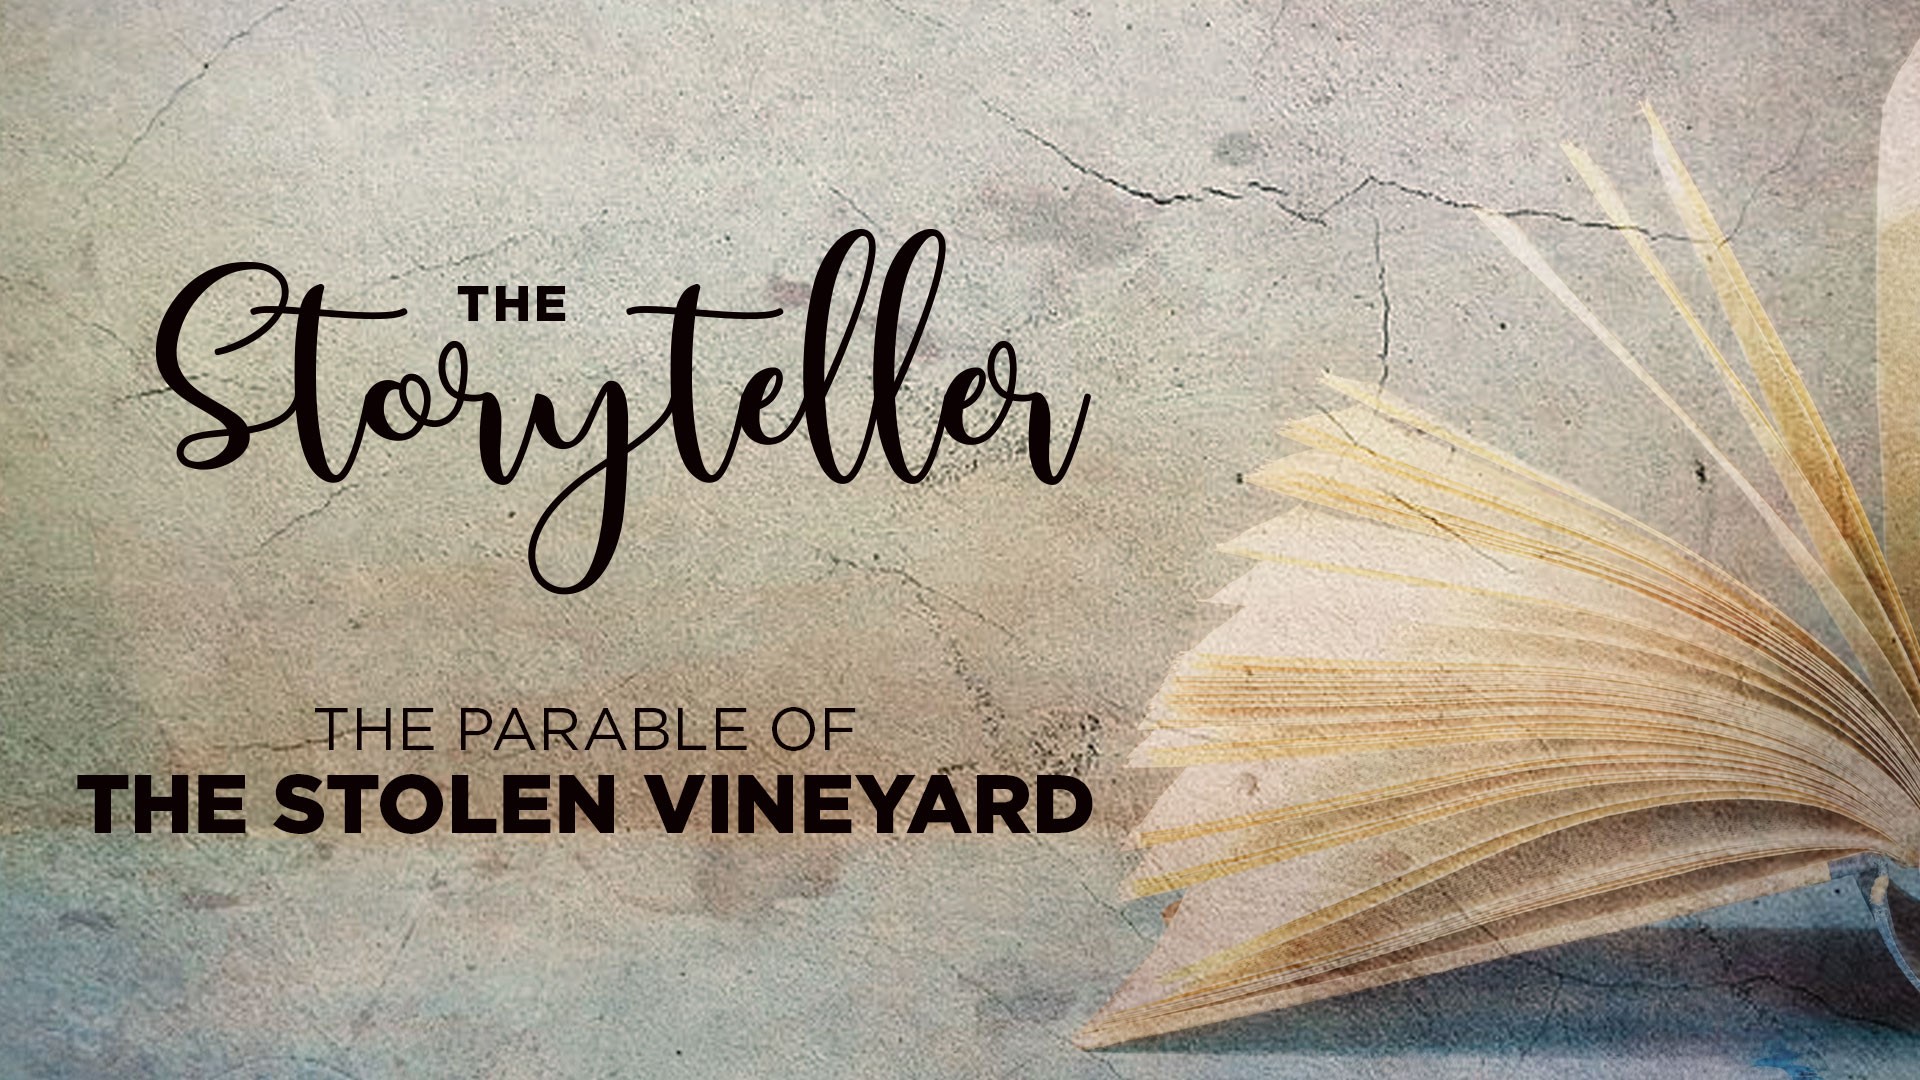 The storyteller - The parable of the stolen vineyard